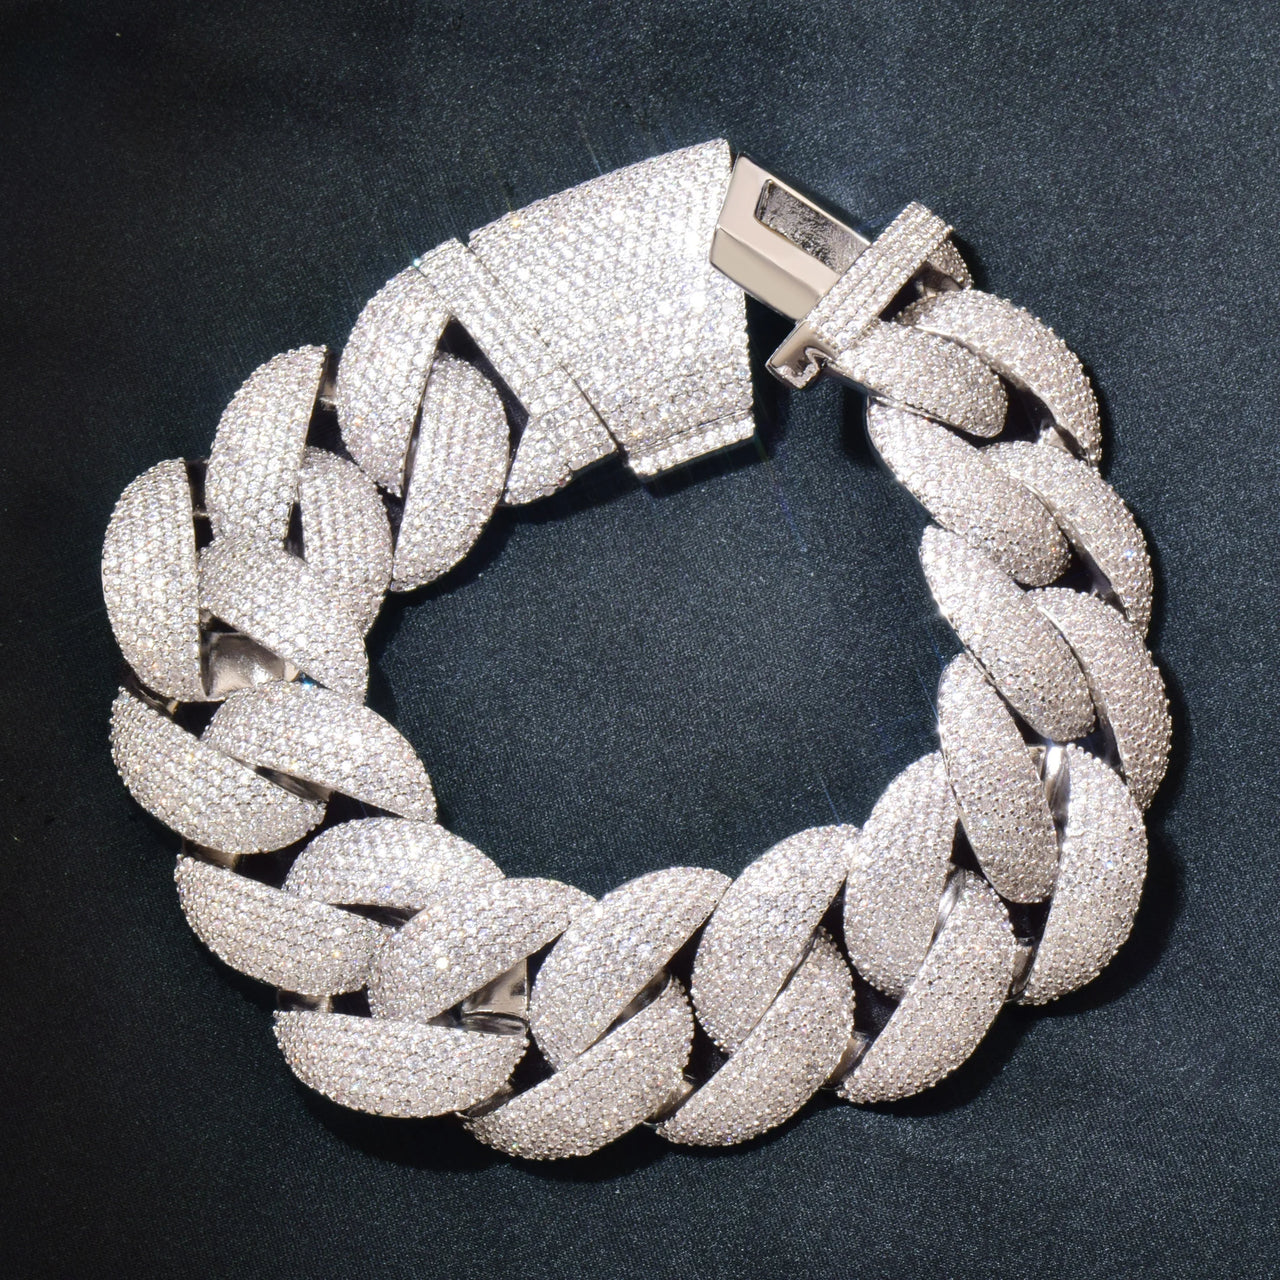 20mm Miami Curb Link Cuban Bracelet - Different Drips